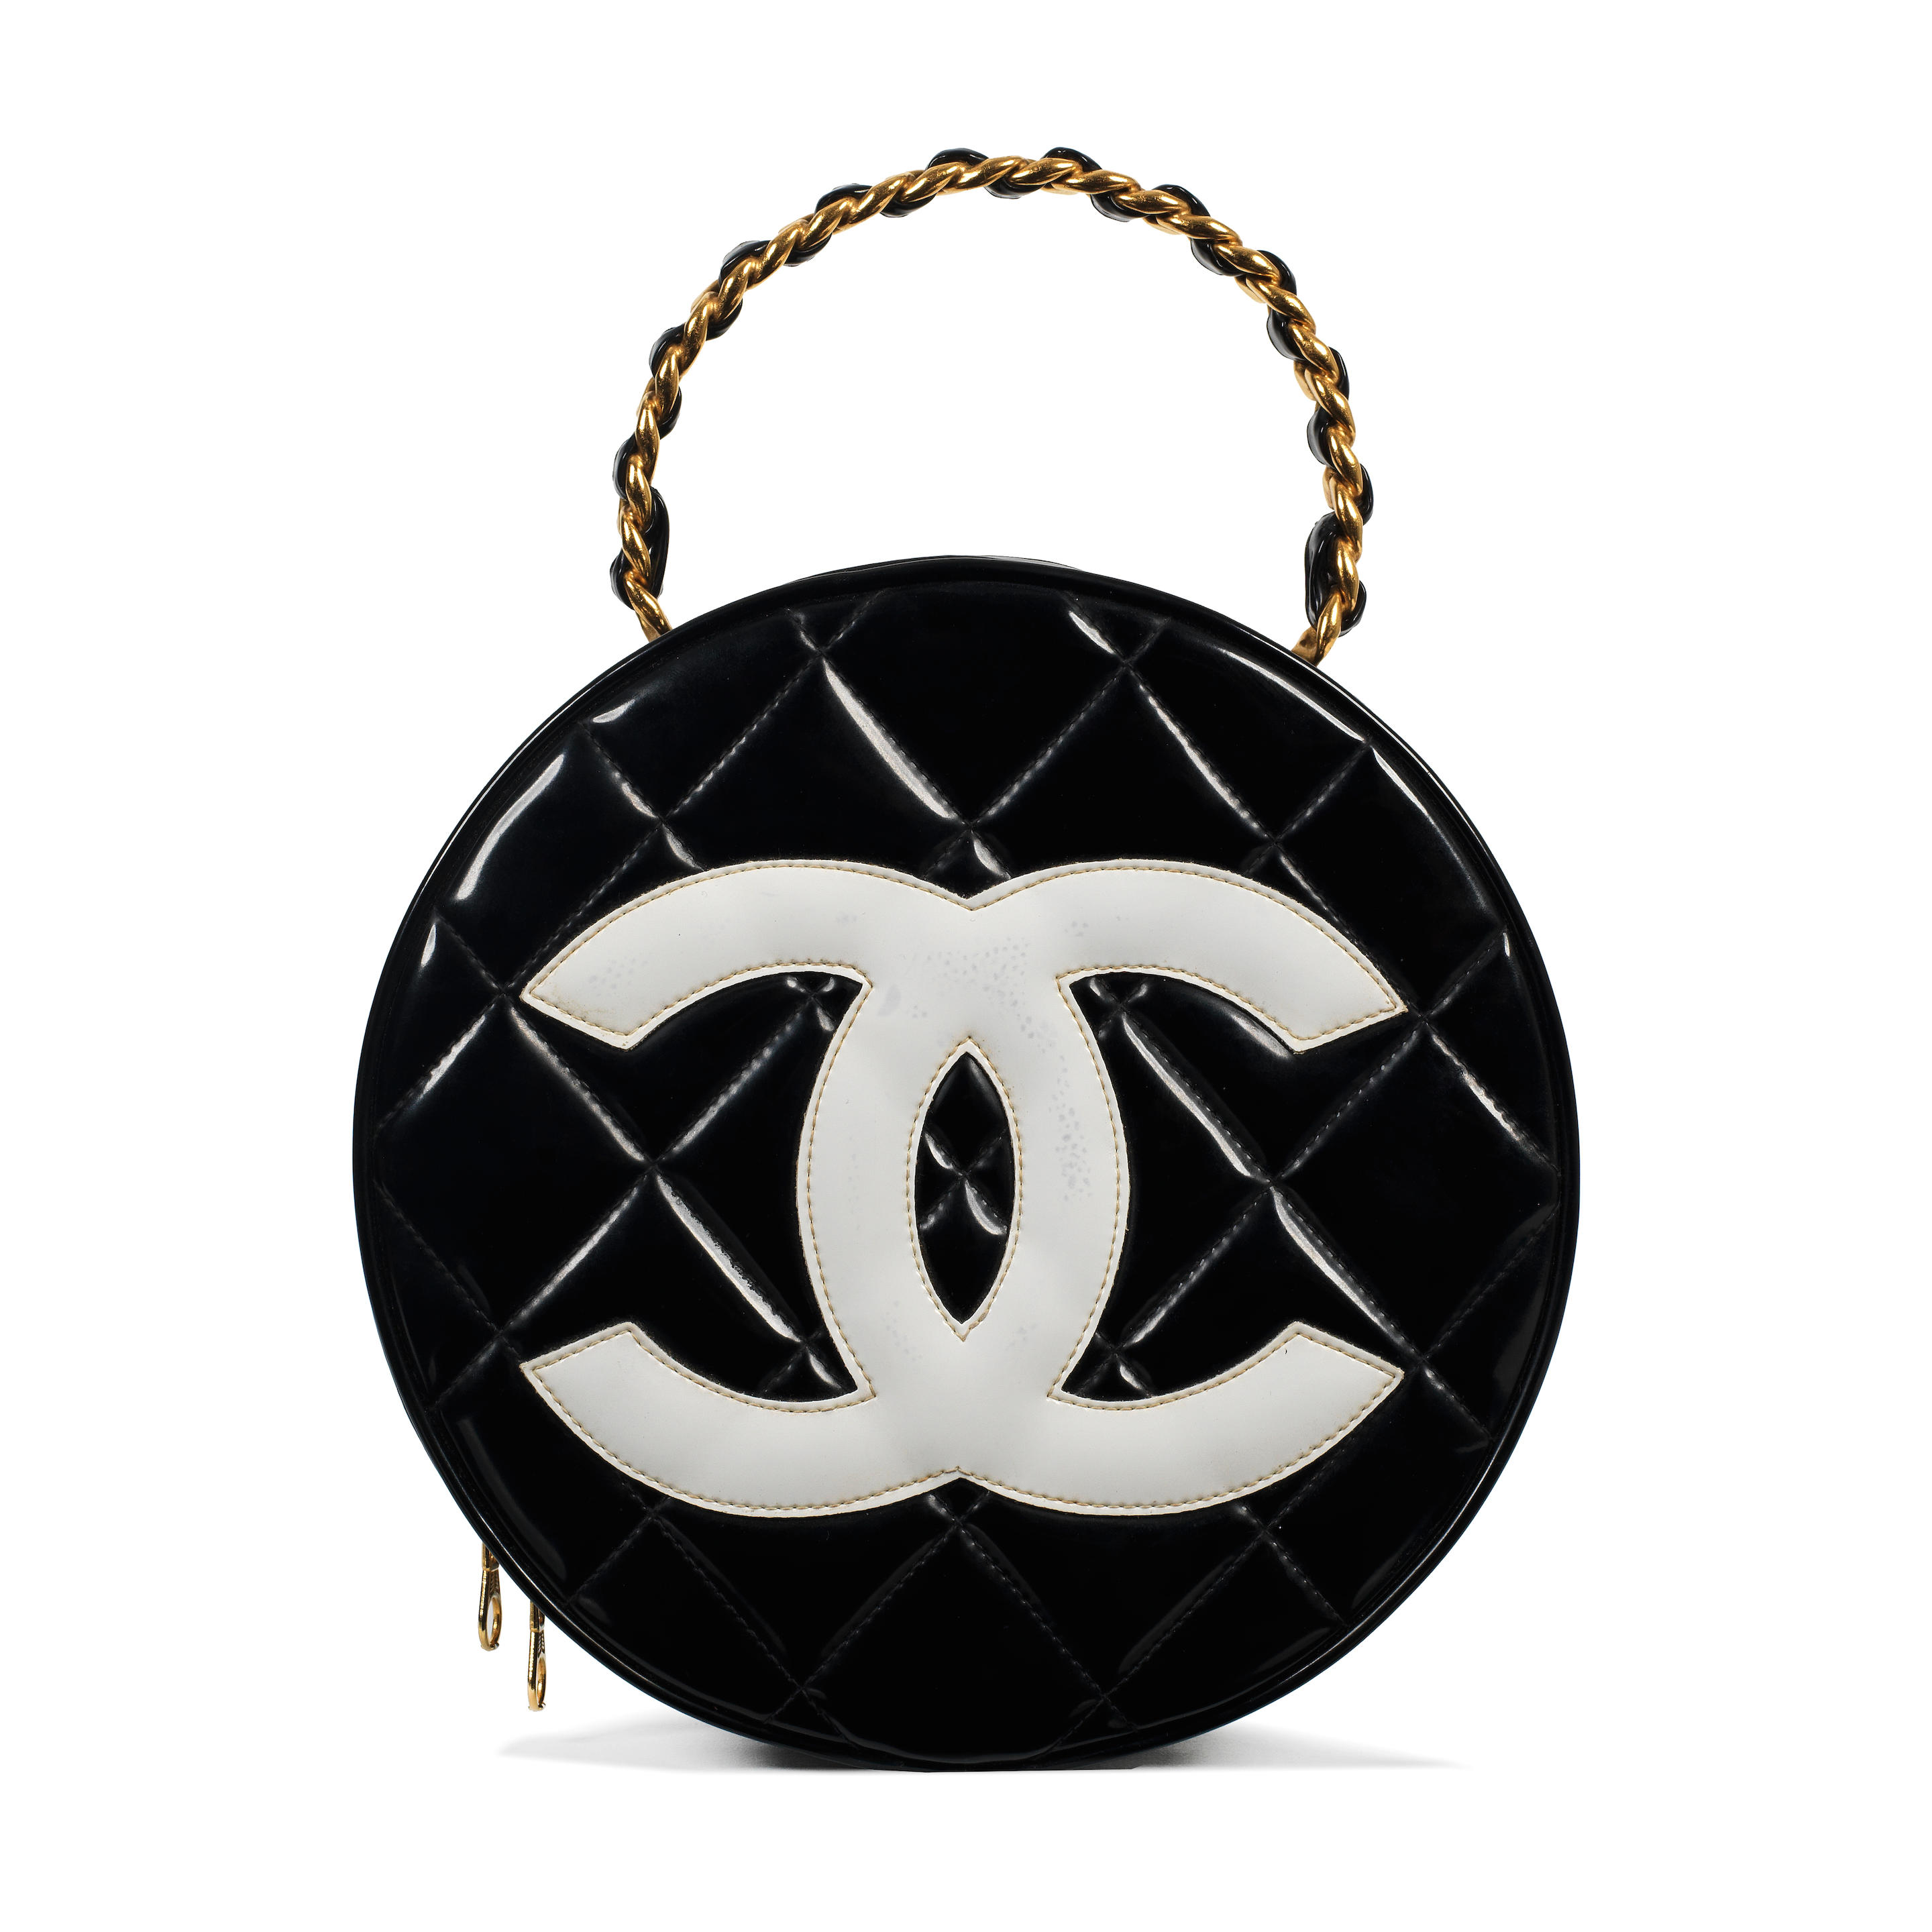 Bonhams : Karl Lagerfeld for Chanel a Black Patent Mademoiselle